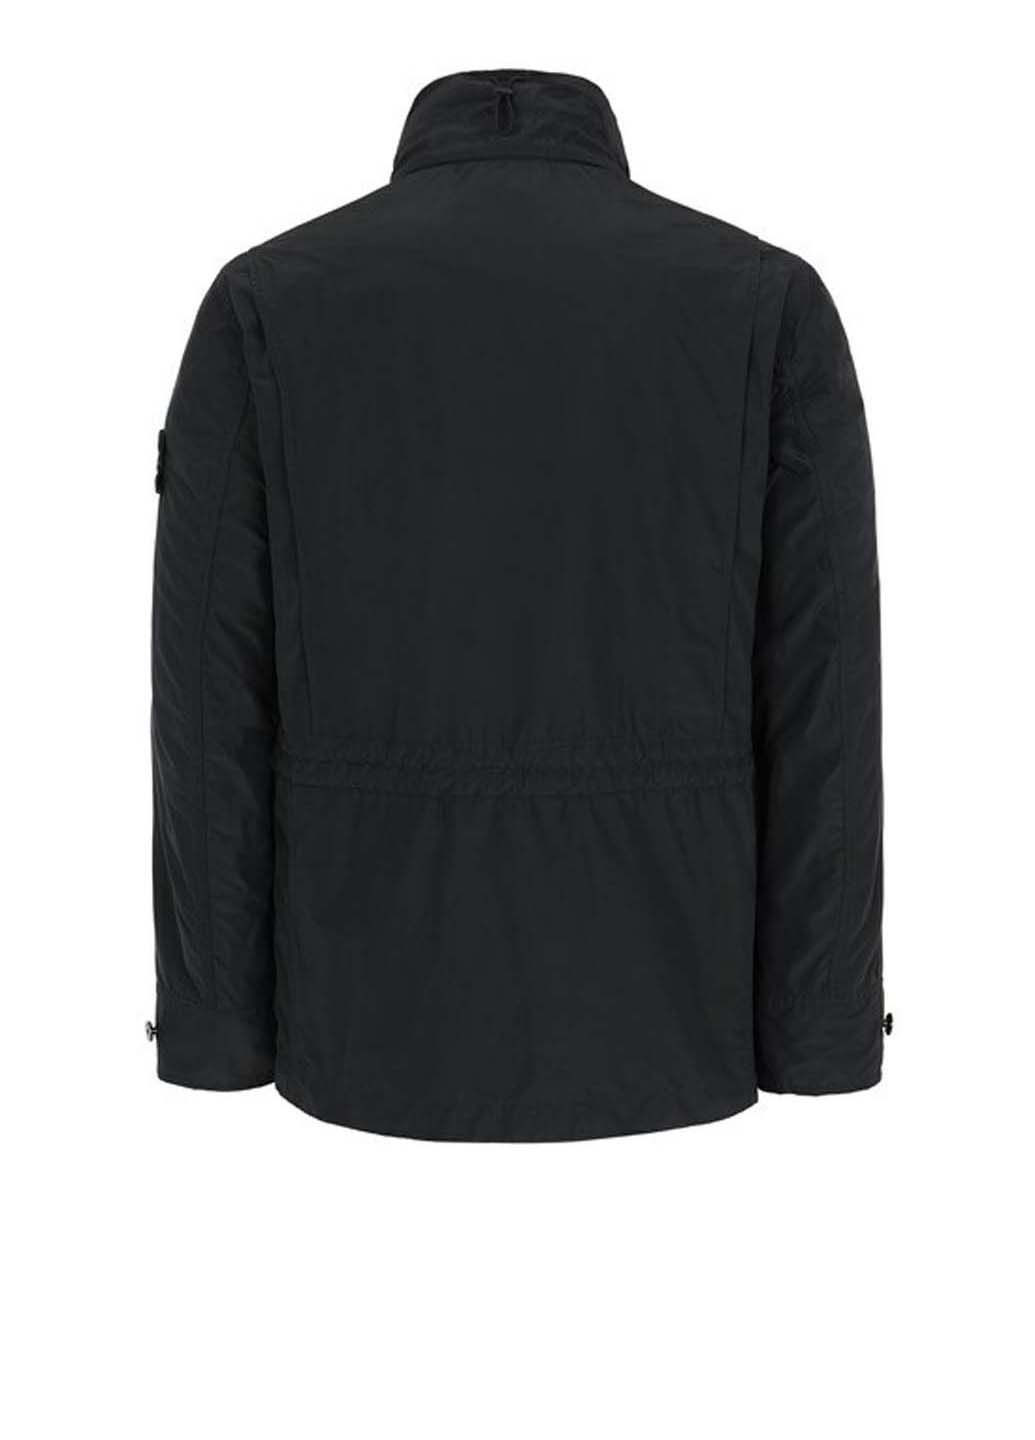 Черная демисезонная куртка 40922 micro reps d Stone Island